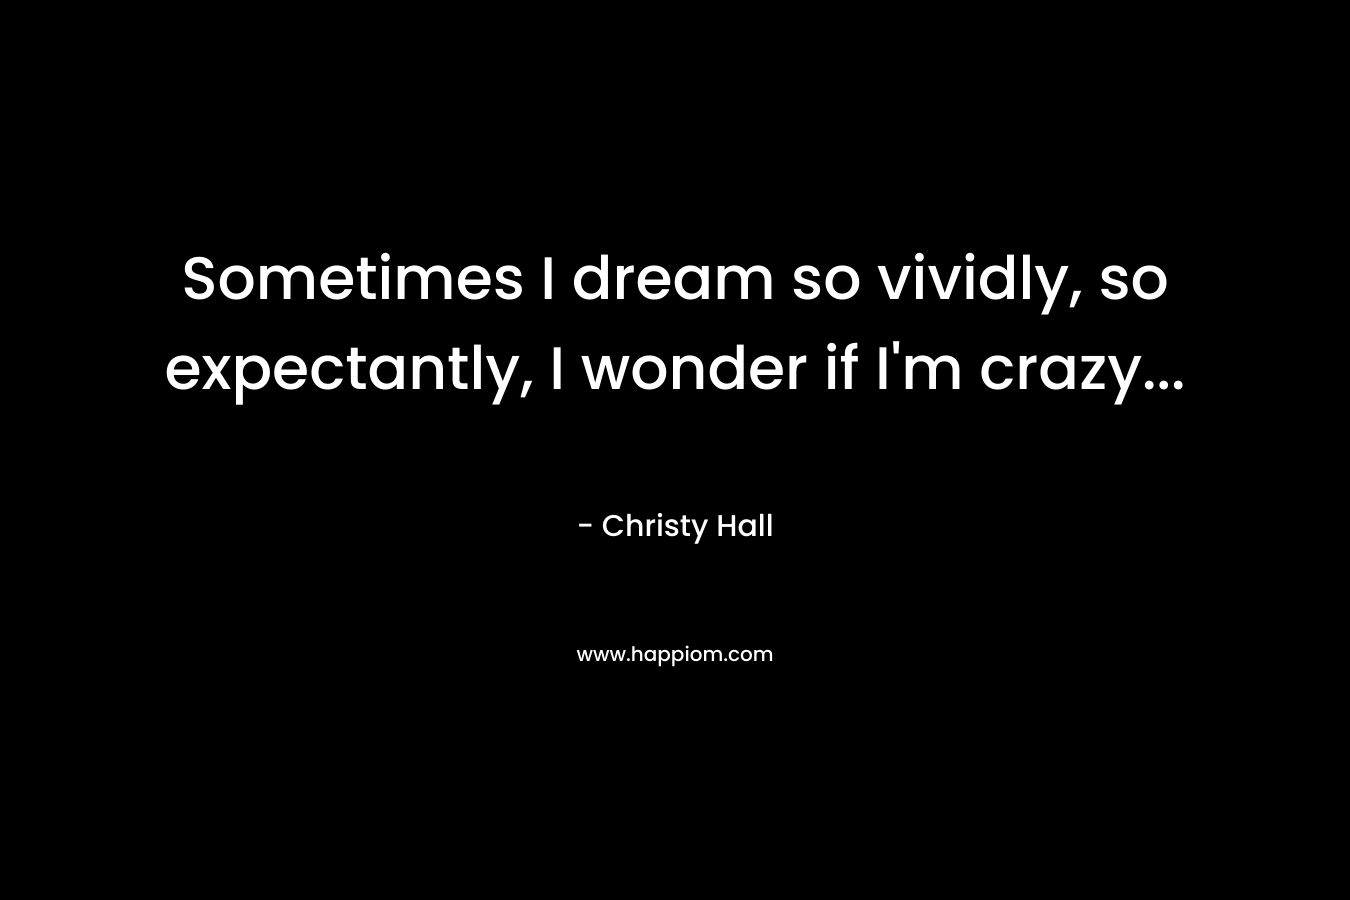 Sometimes I dream so vividly, so expectantly, I wonder if I'm crazy...